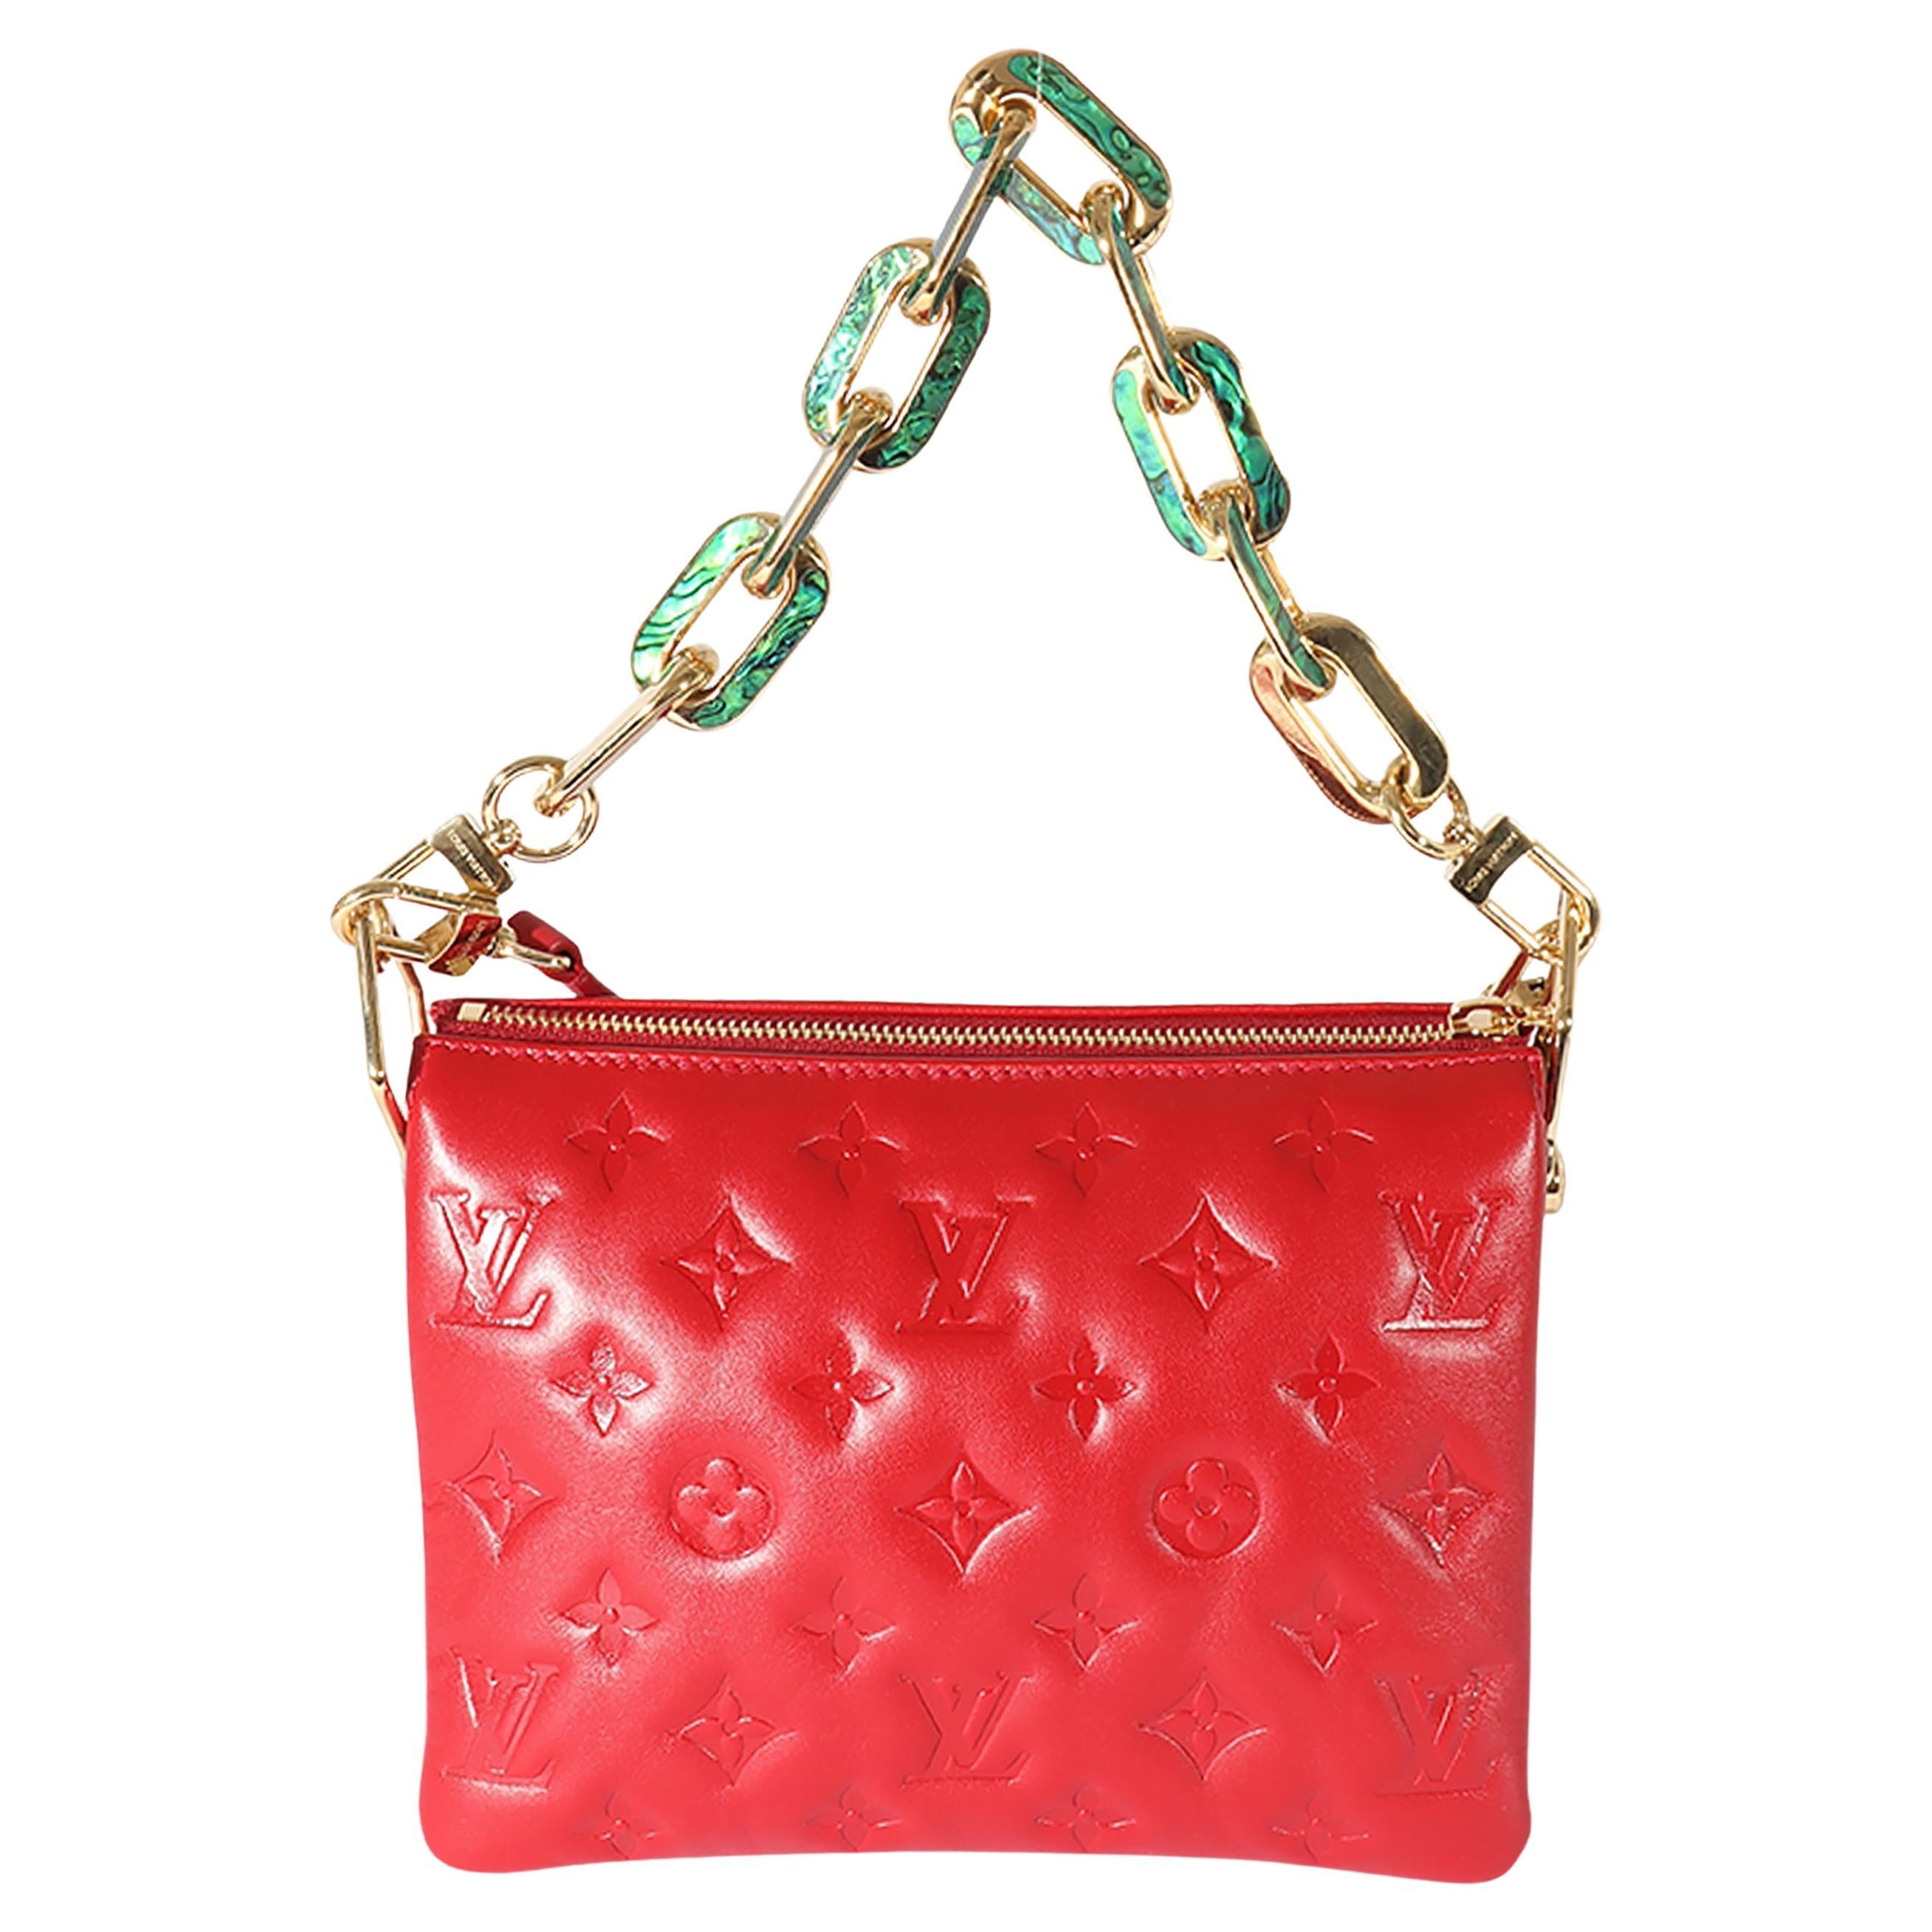 Coussin BB Fashion Leather - Handbags